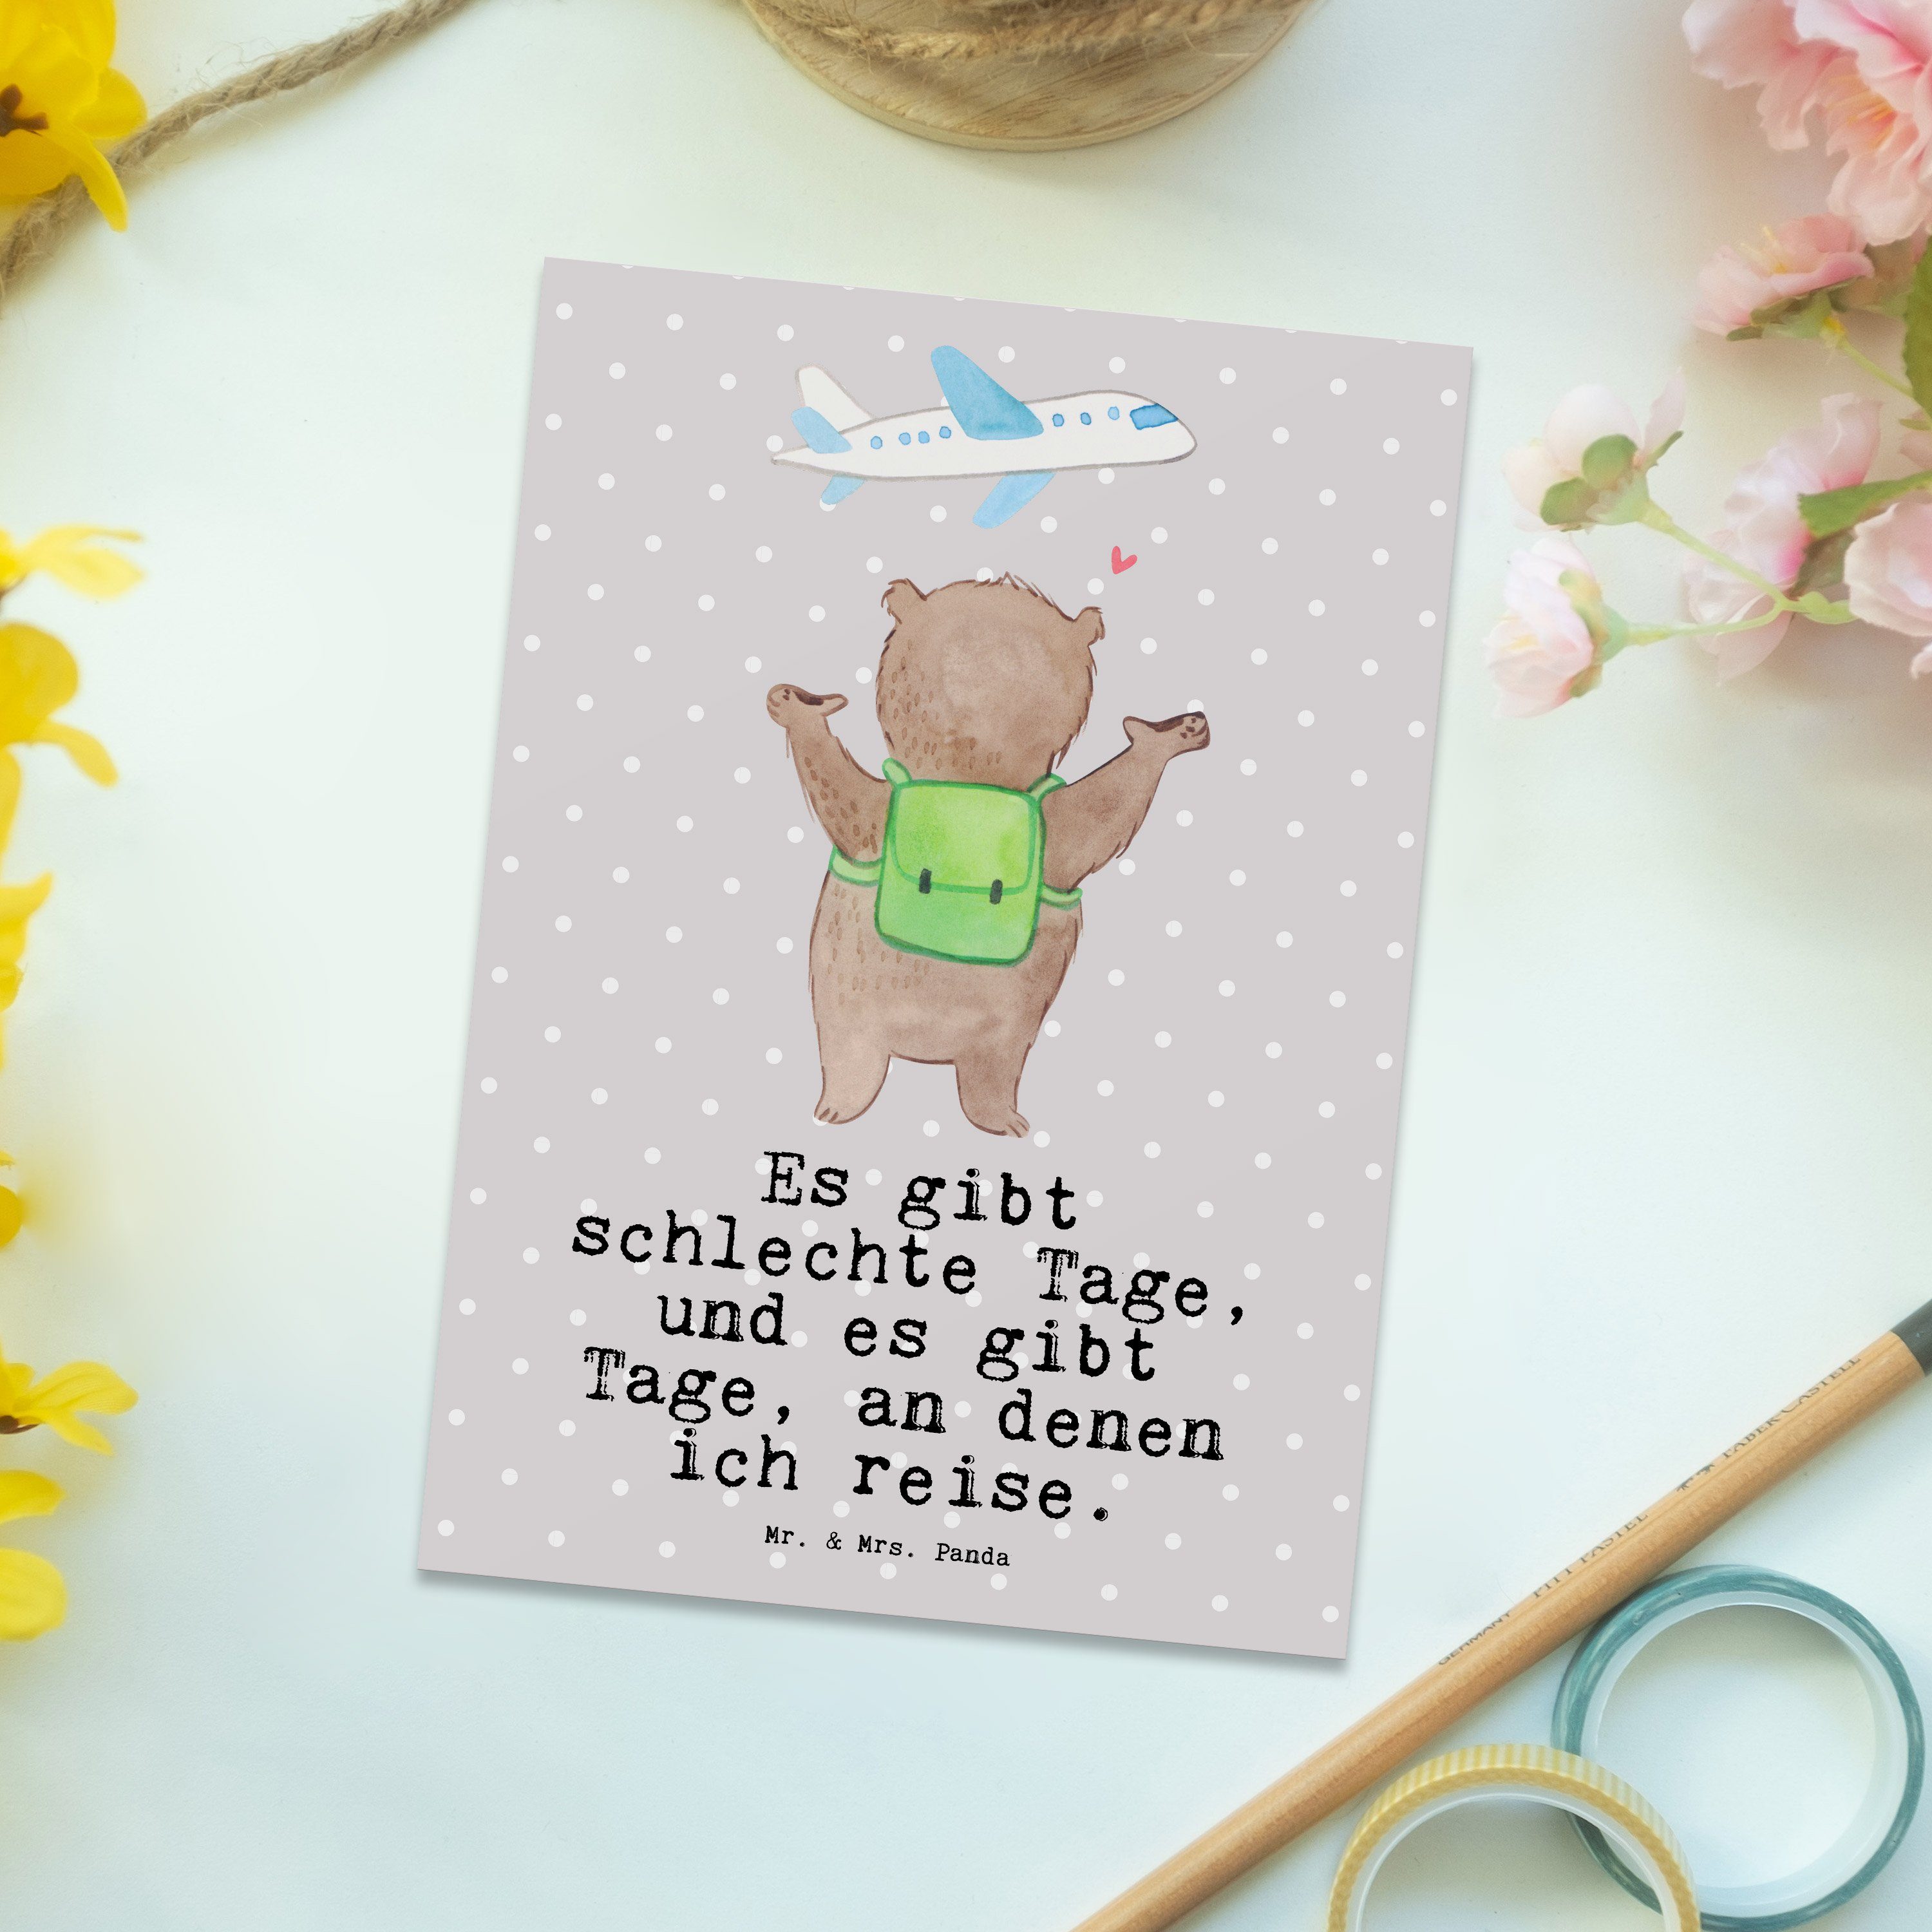 Mr. & Mrs. Panda Postkarte Bär Reisen Tage - Grau Pastell - Geschenk, Weltreise, Karte, Danke, S